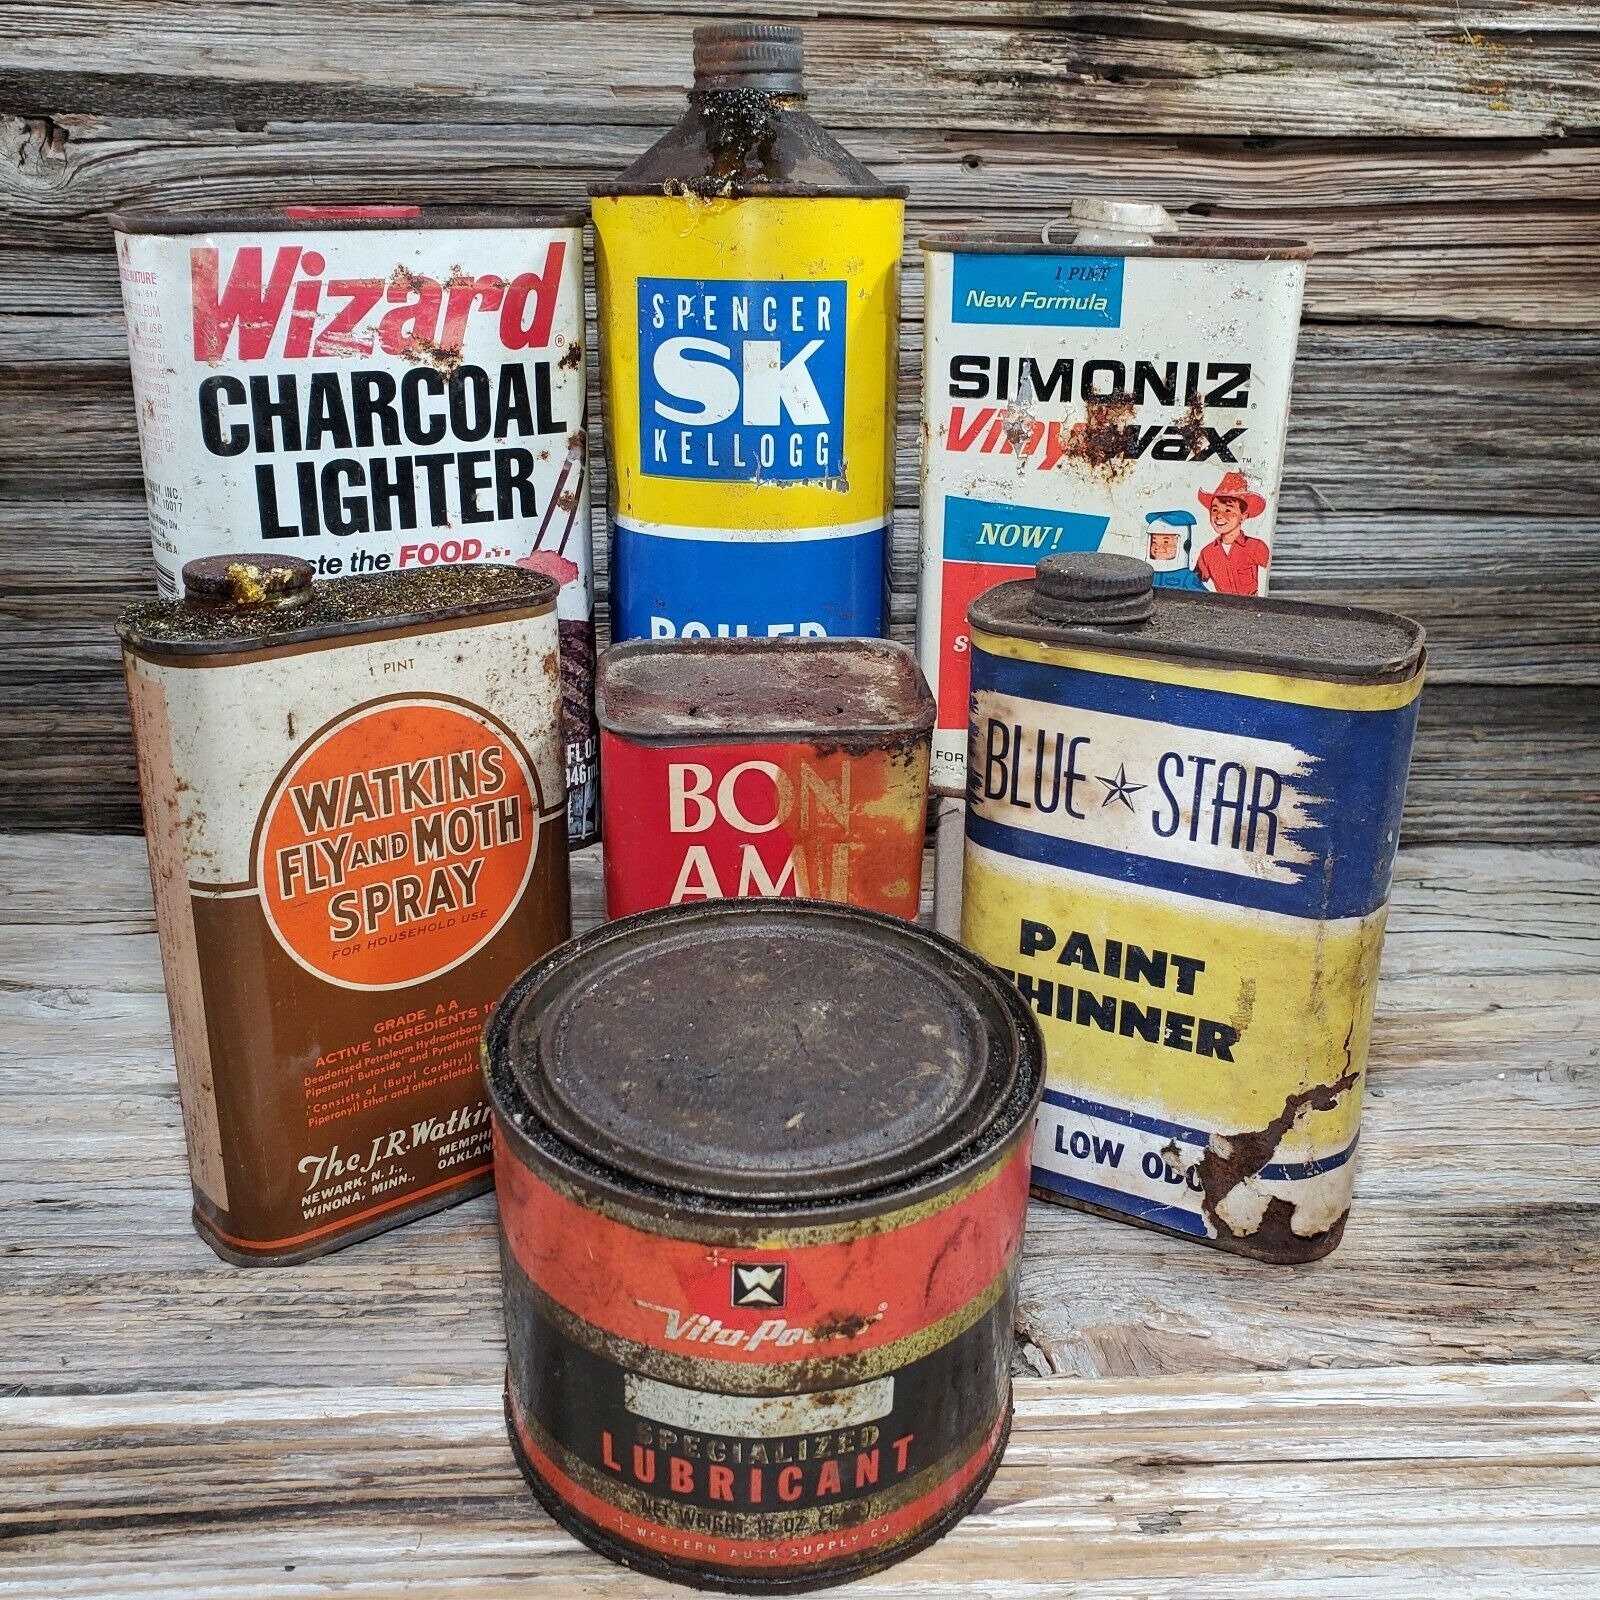 Vintage Bortzoil Products Lacquer Thinner 1 Gallon Can Paint Lion Graphic  Empty